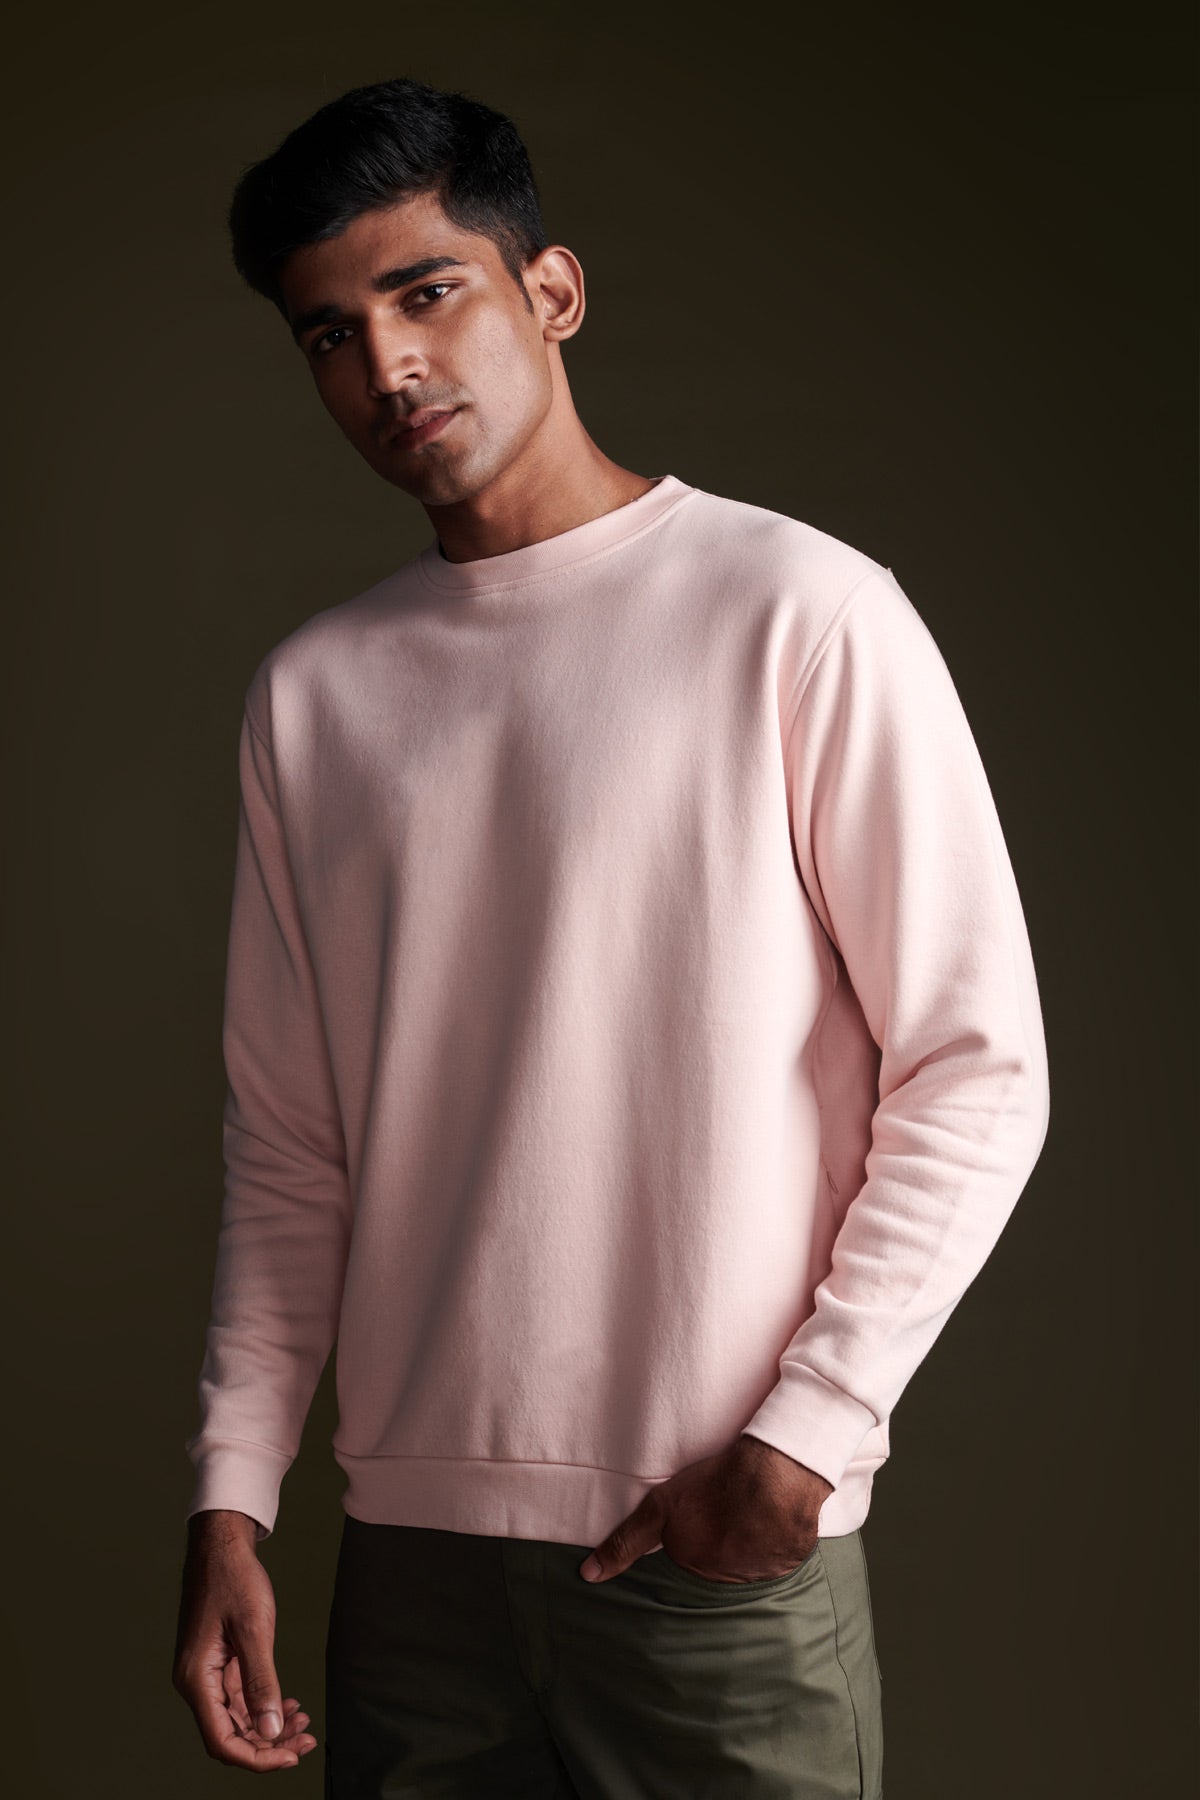 Baby Pink Sweatshirt